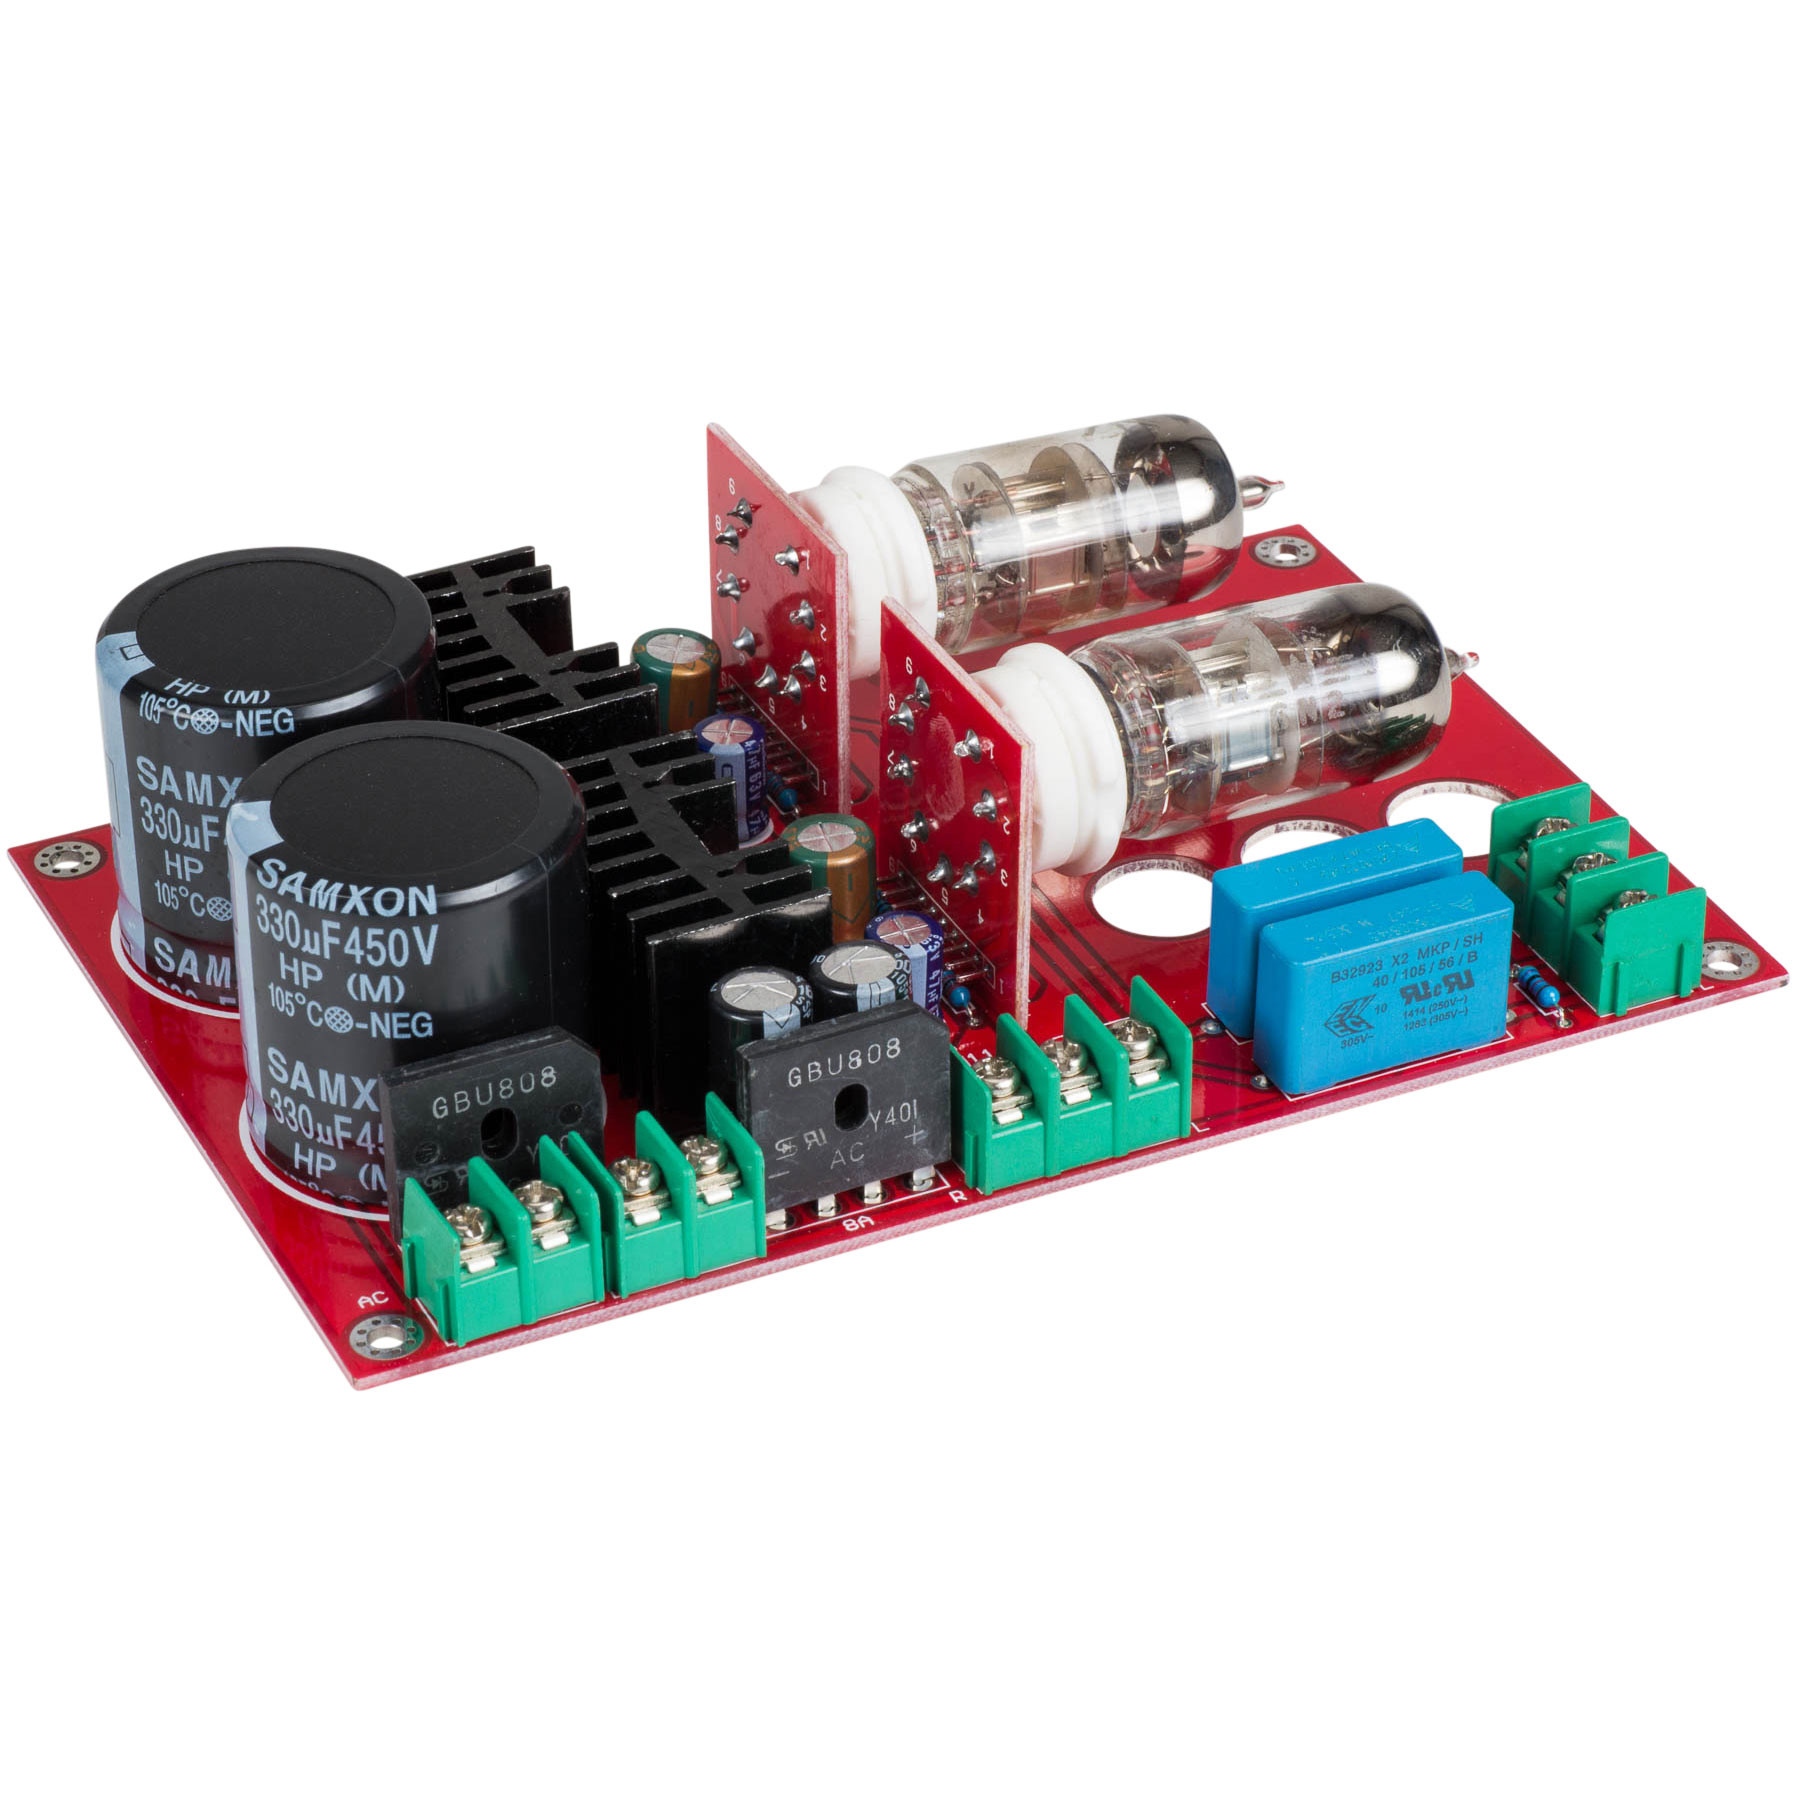 DIY Audio Amplifier Kits
 Yuan Jing Pre and Tube Amplifier Kit 6N2 SRPP for DIY